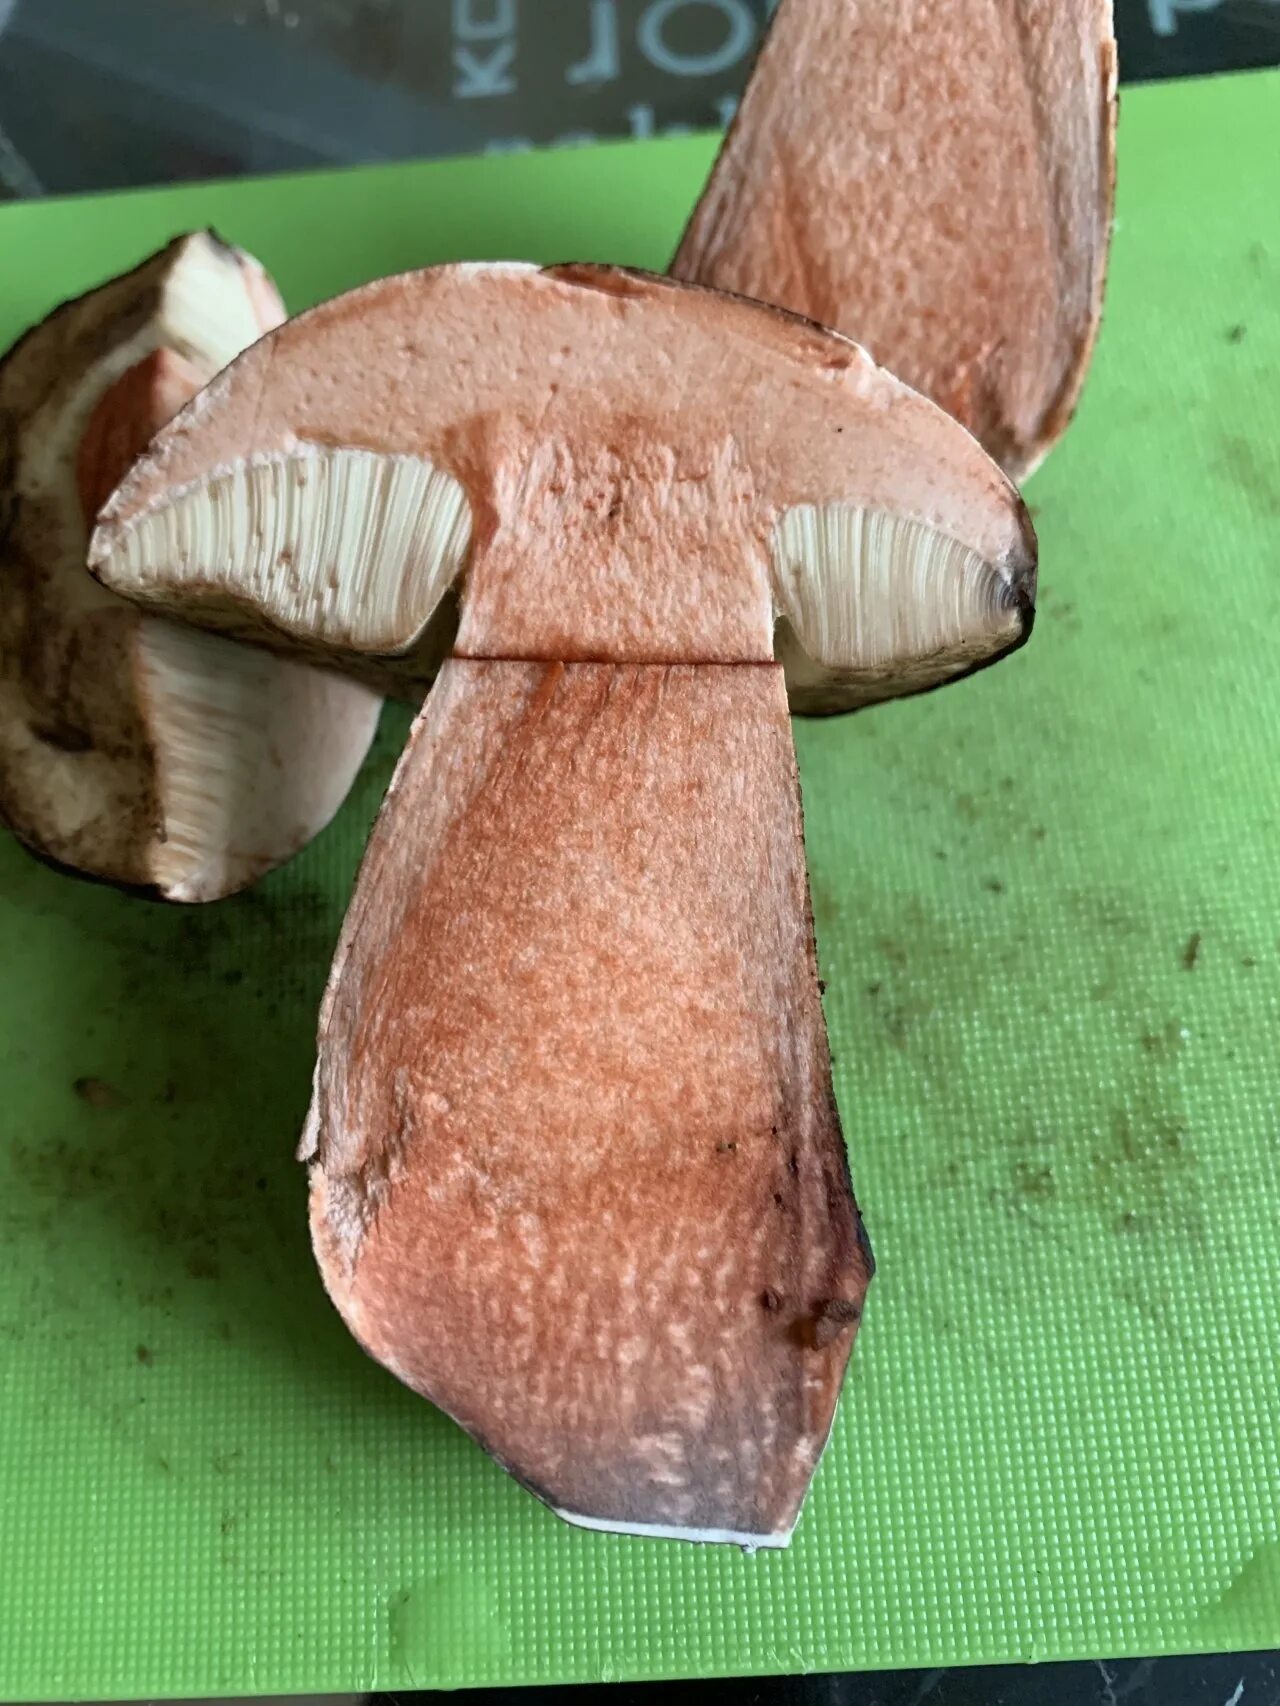 Срез грибов. Гриб розовеет на срезе. Срез гриба. Пластинчатый гриб розовеющий на срезе. Подосиновик розовеет на срезе.